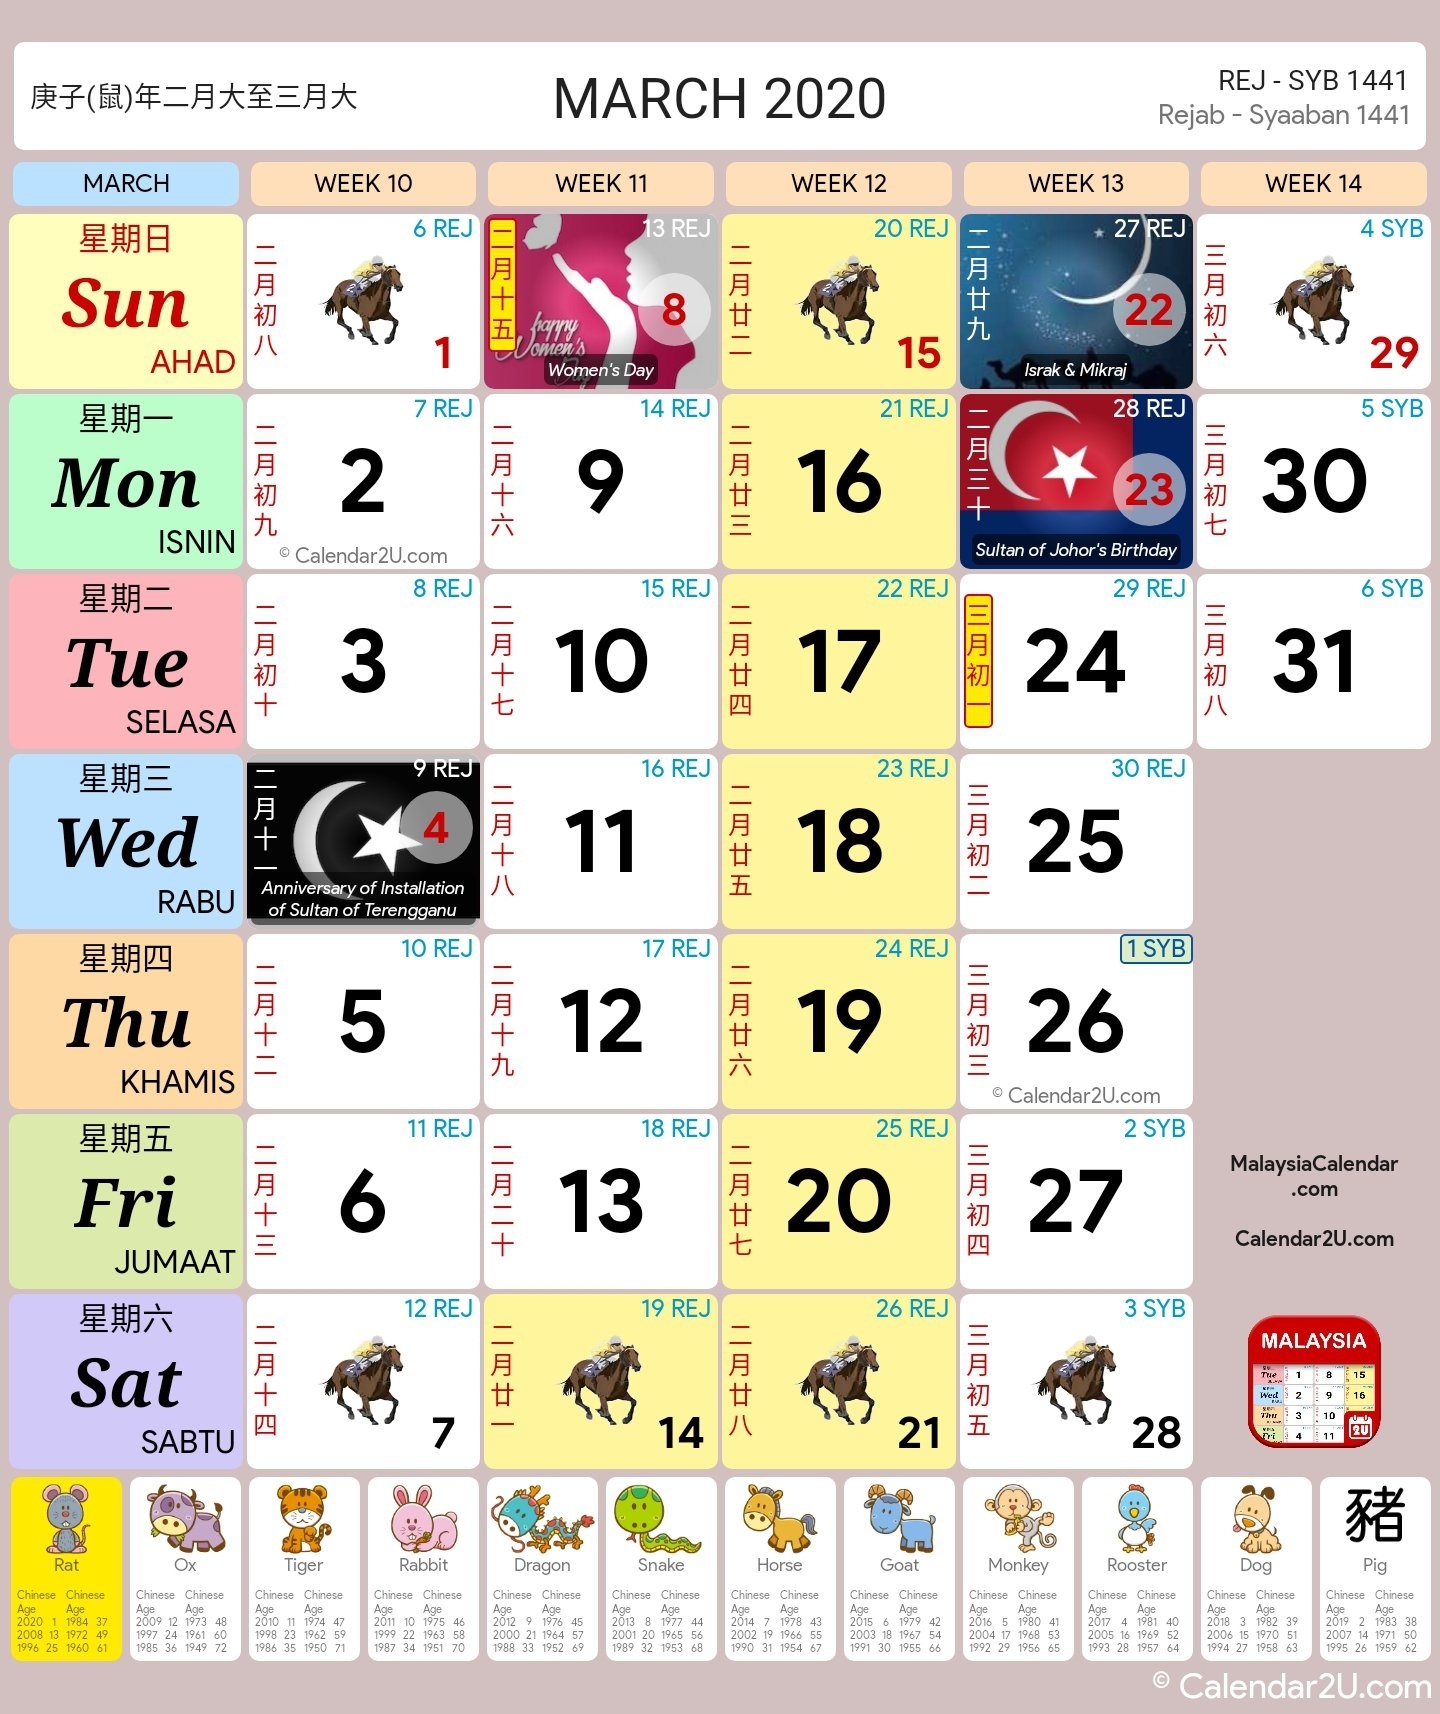 Malaysia Calendar Year 2020 (School Holiday) - Malaysia Calendar Impressive Malaysian School Holiday Calendar Template 2020